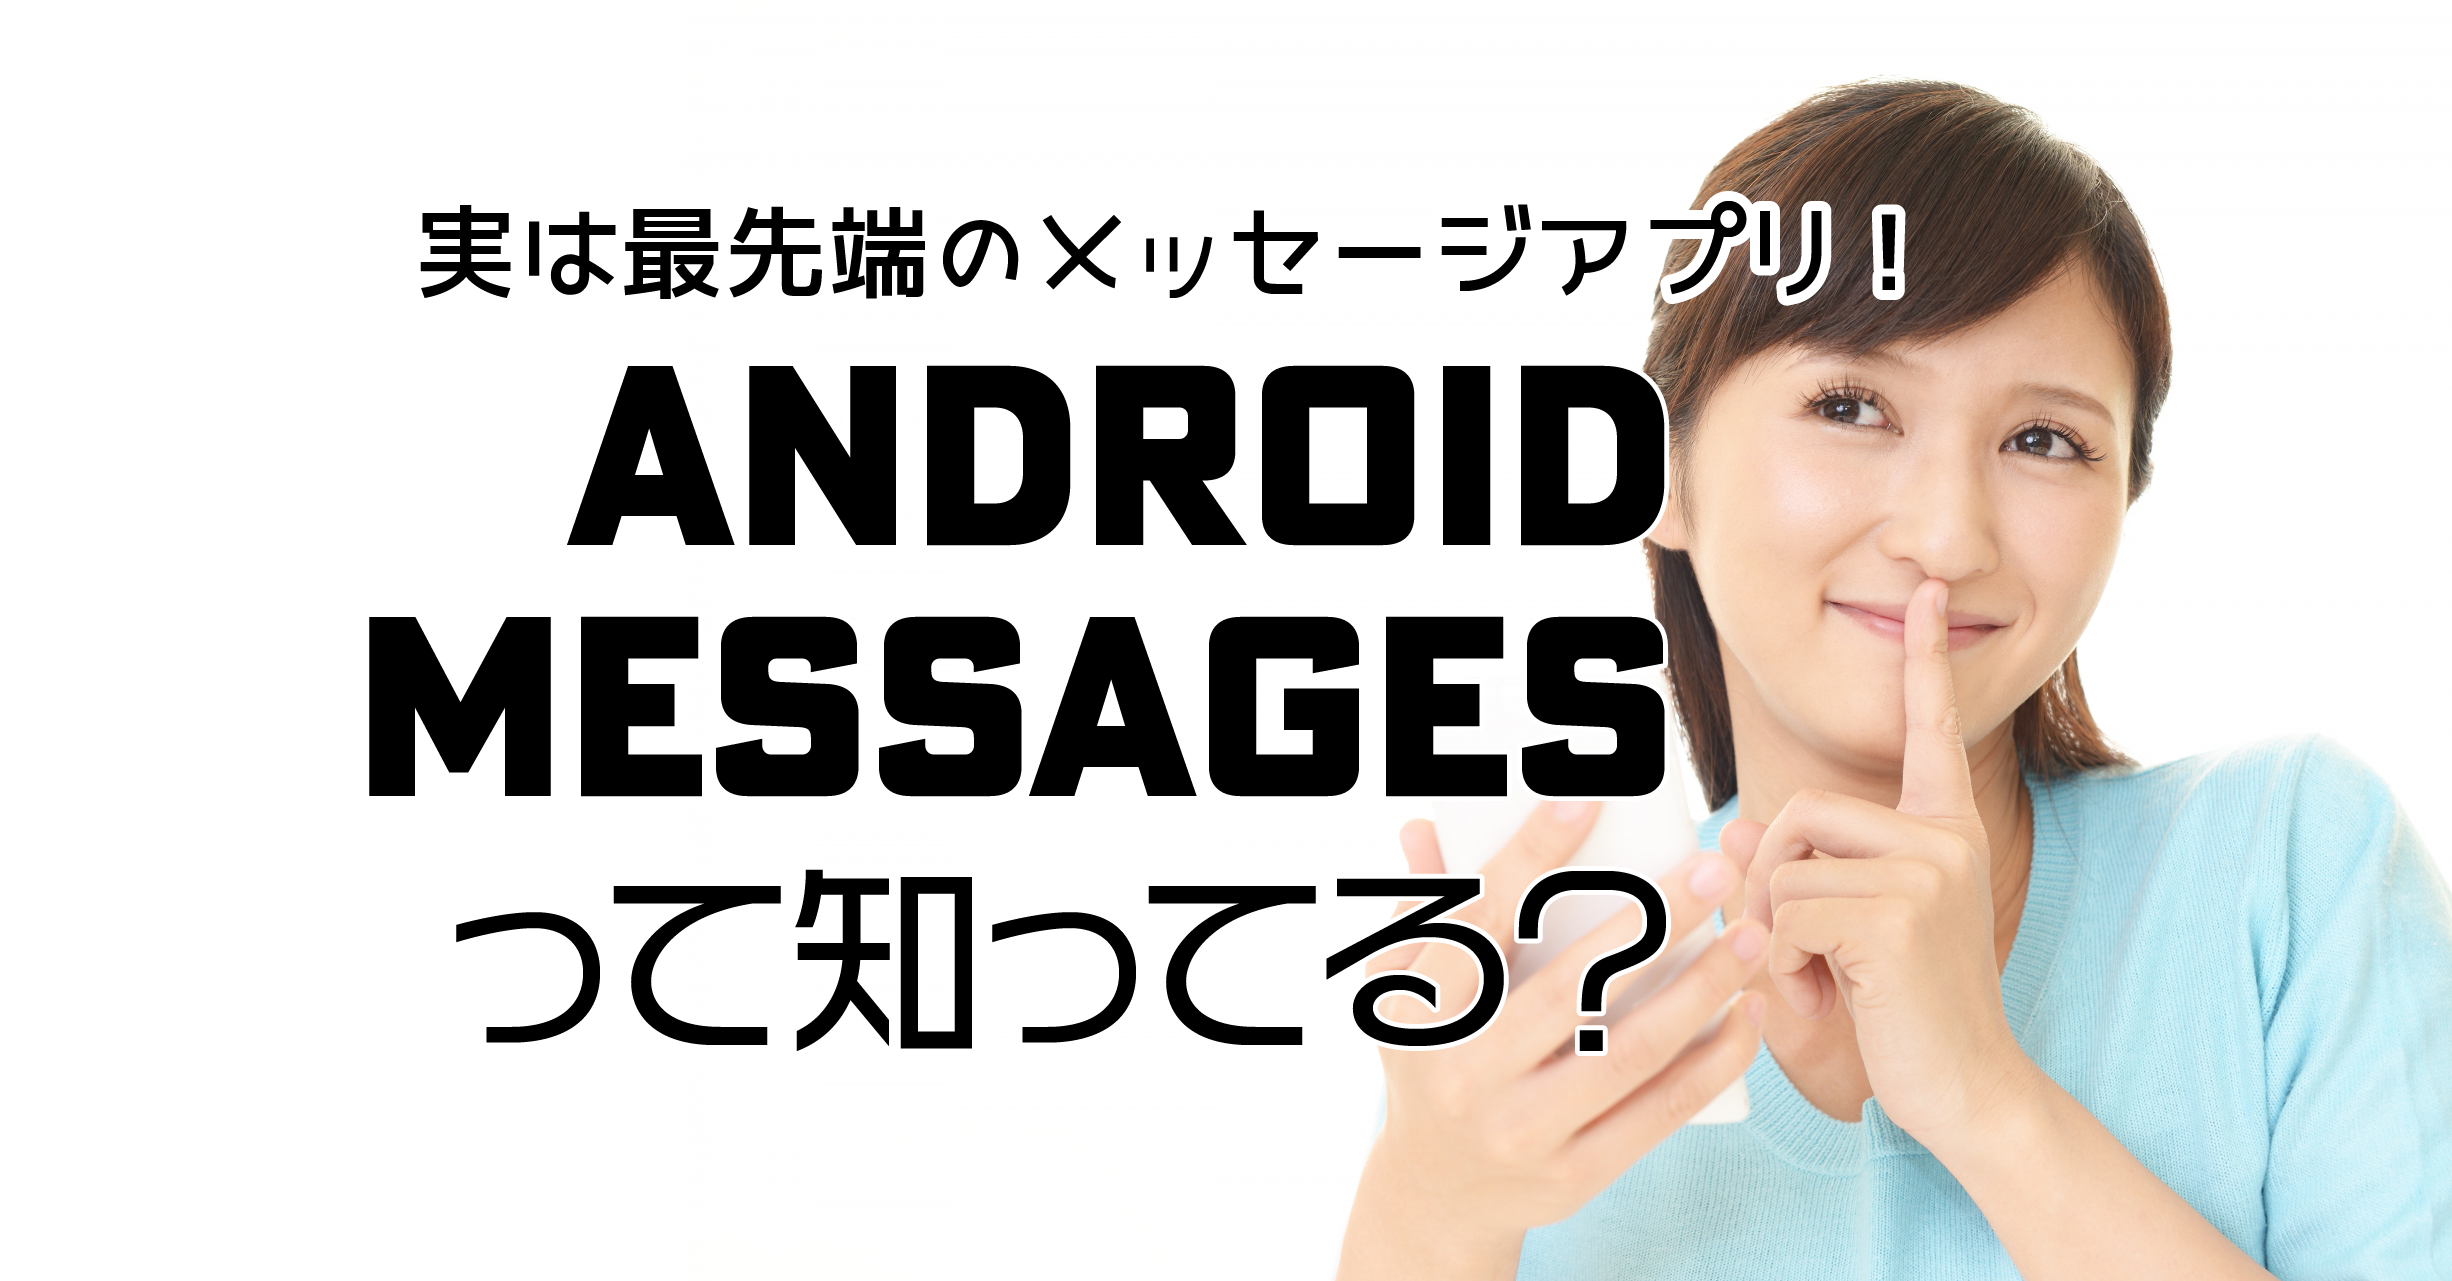 AndroidMessages知ってる?|実は最先端のメッセージアプリ